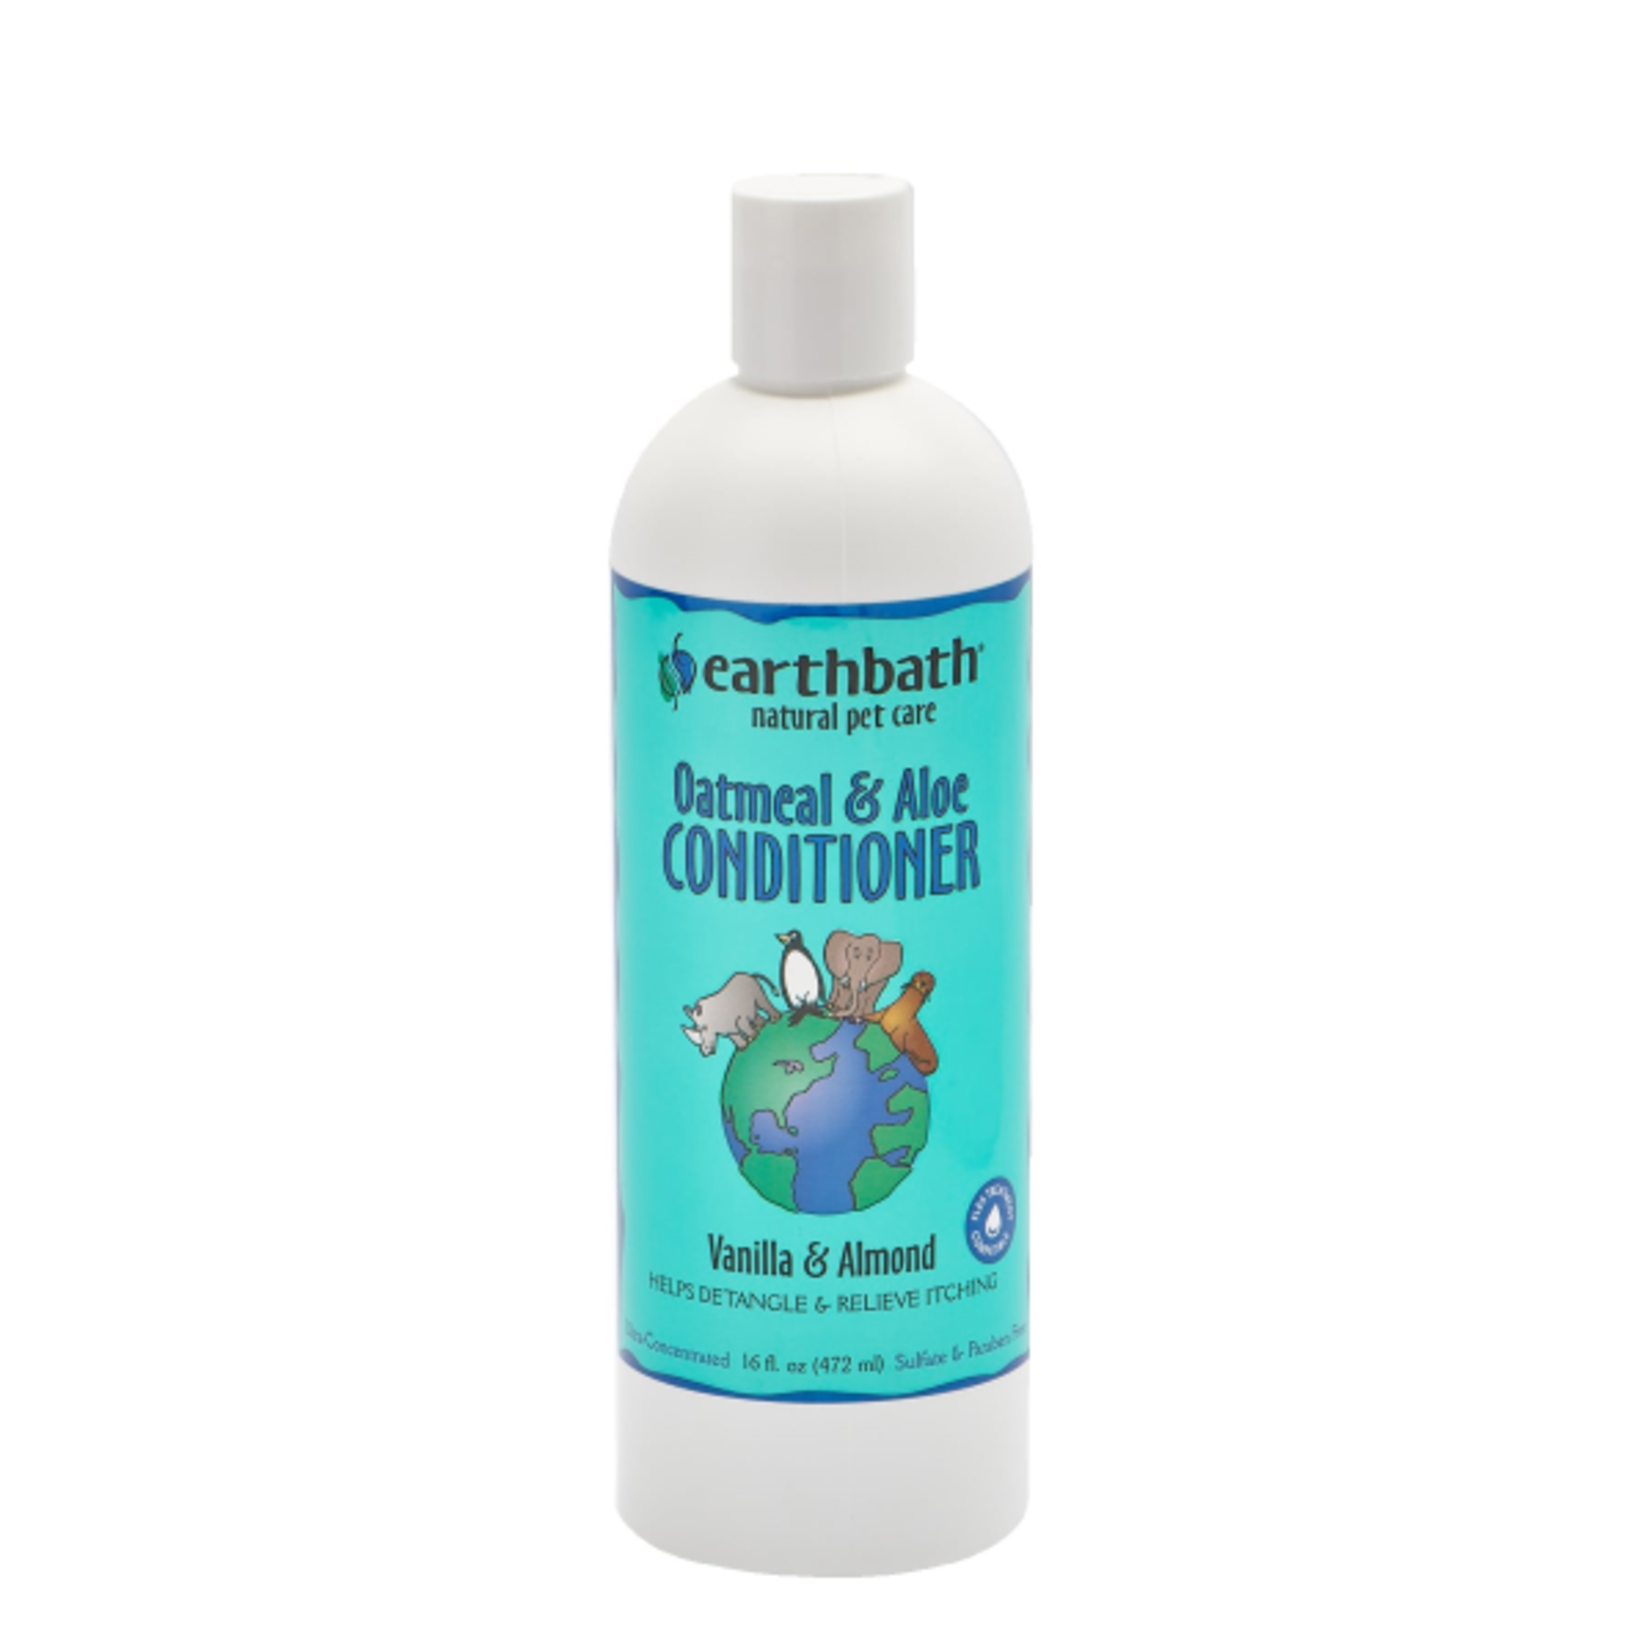 EARTH BATH earthbath Oatmeal&Aloe Conditioner Vanilla & Almond 16 oz